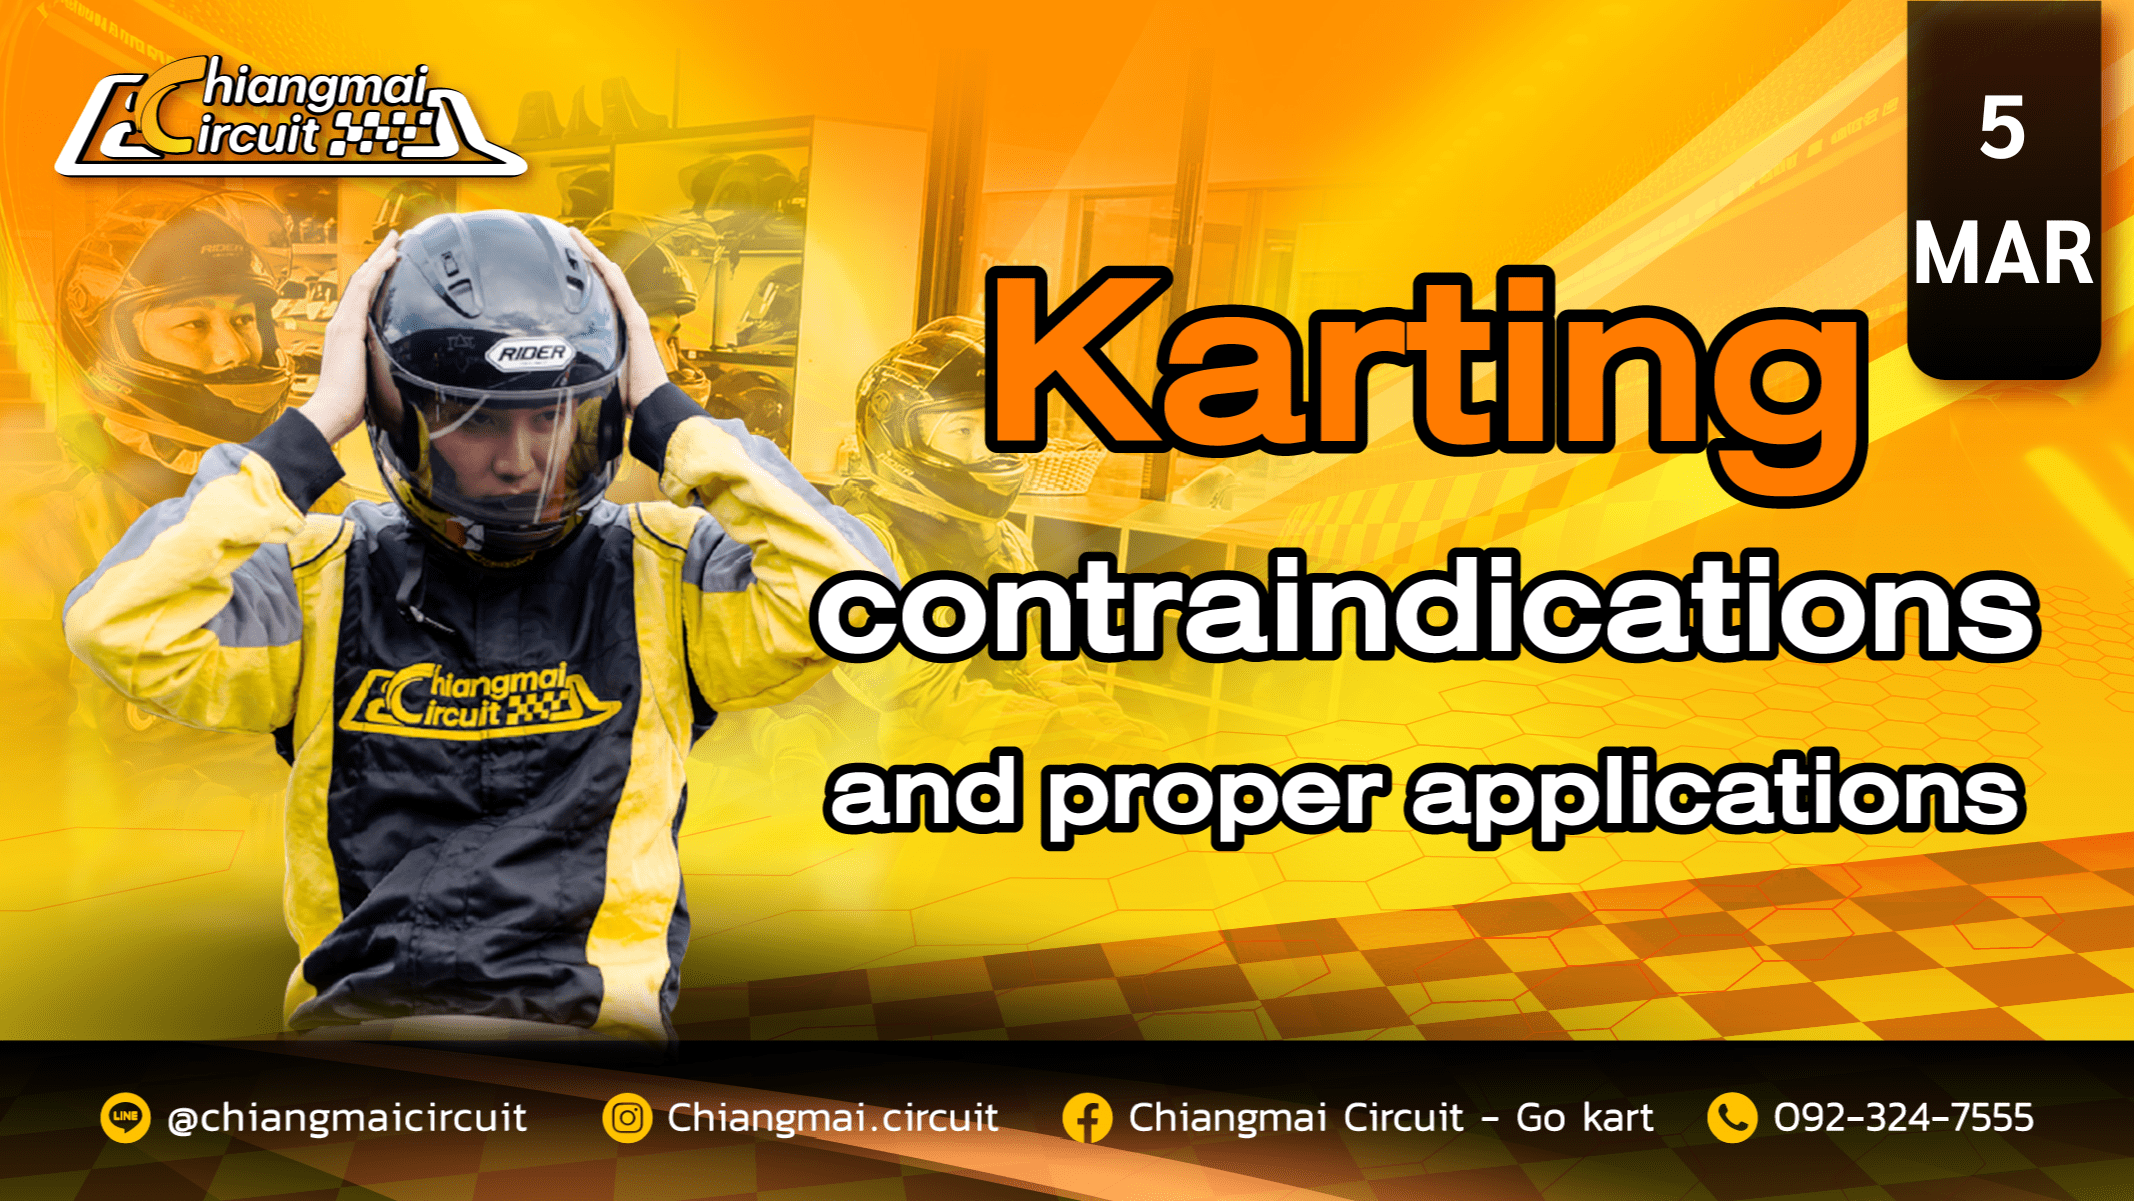 Karting contraindications and proper applications